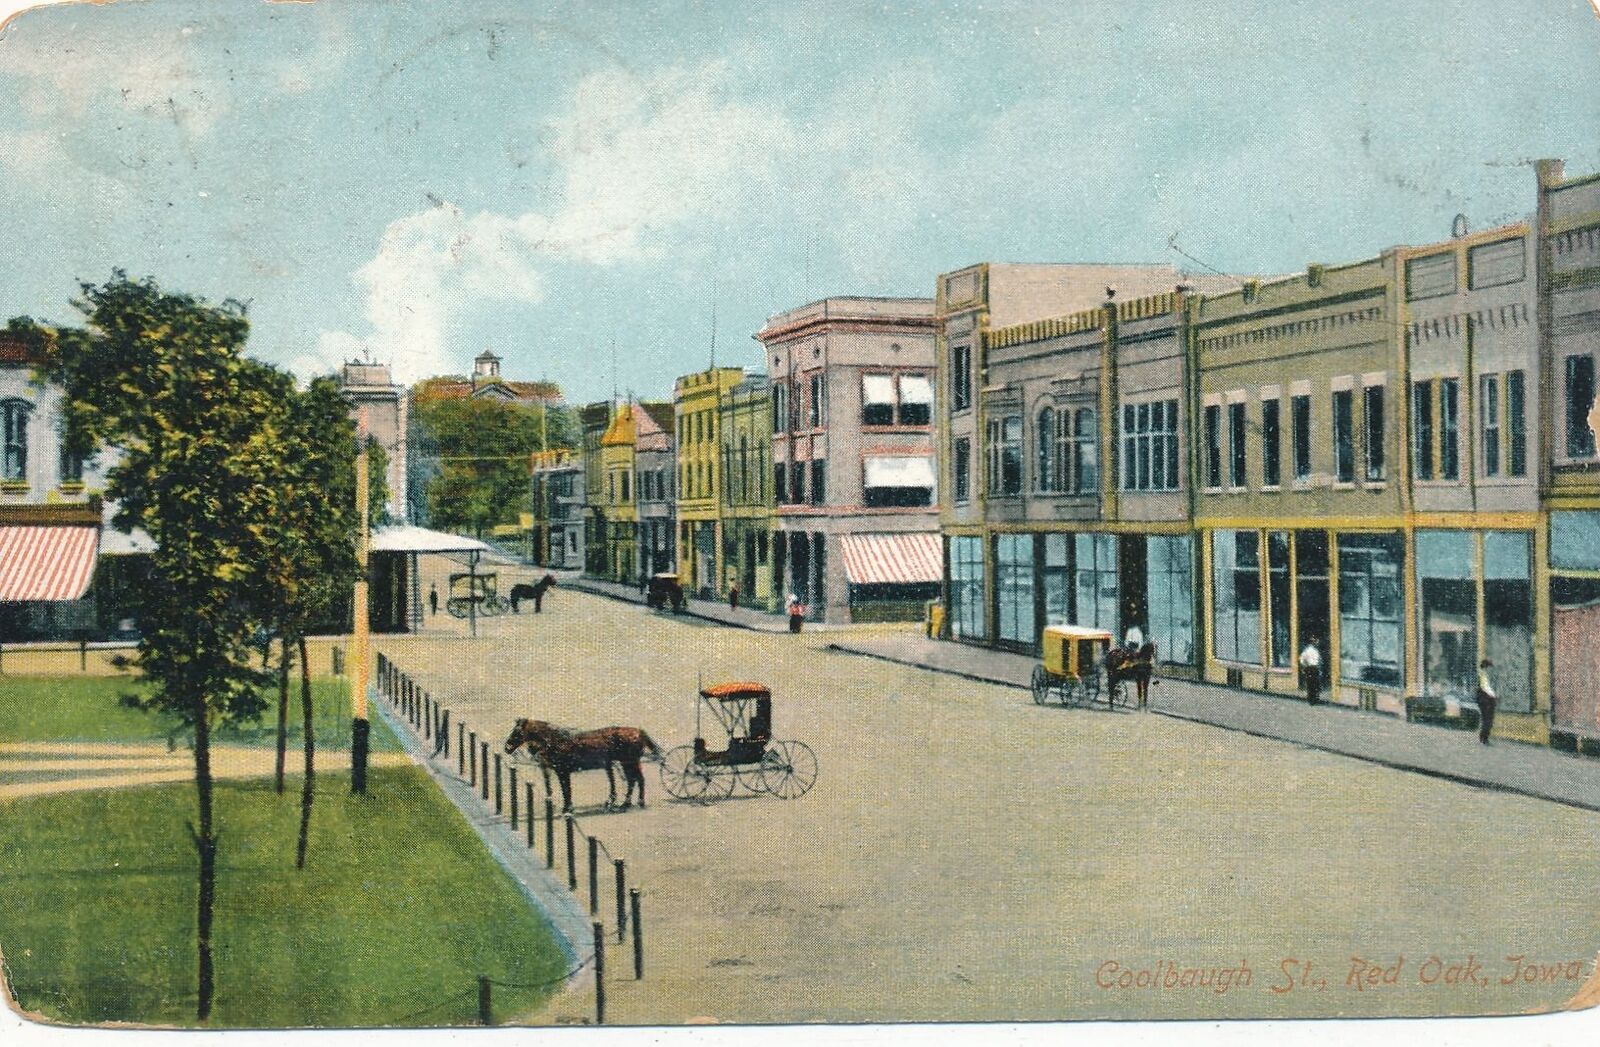 RED OAK IA - Coolbaugh Street Postcard - 1909